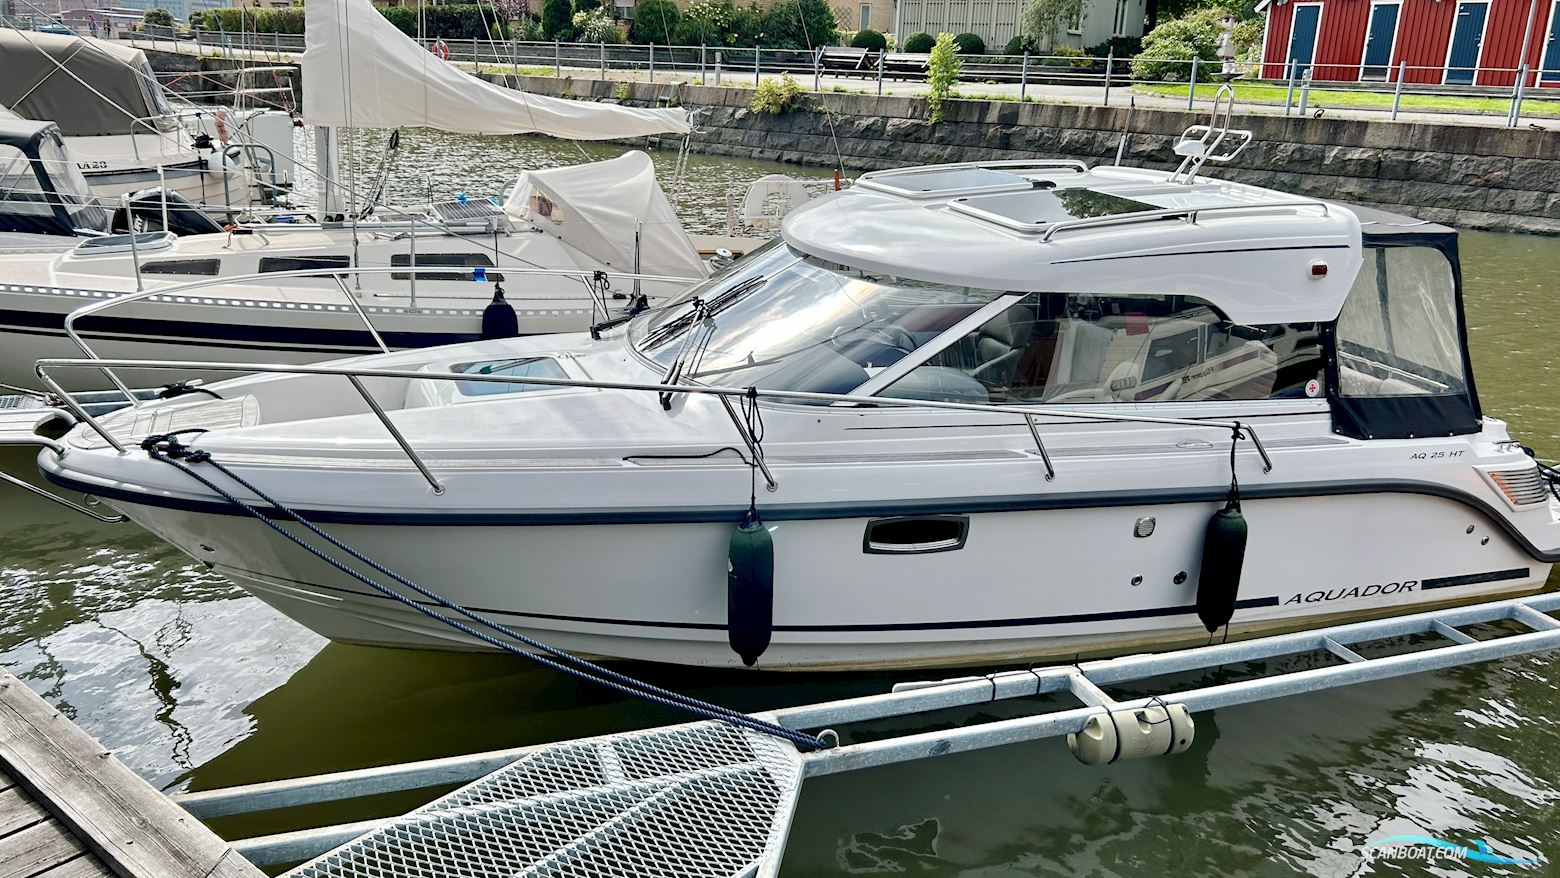 Aquador 25 HT Motor boat 2019, with Mercruiser engine, Sweden